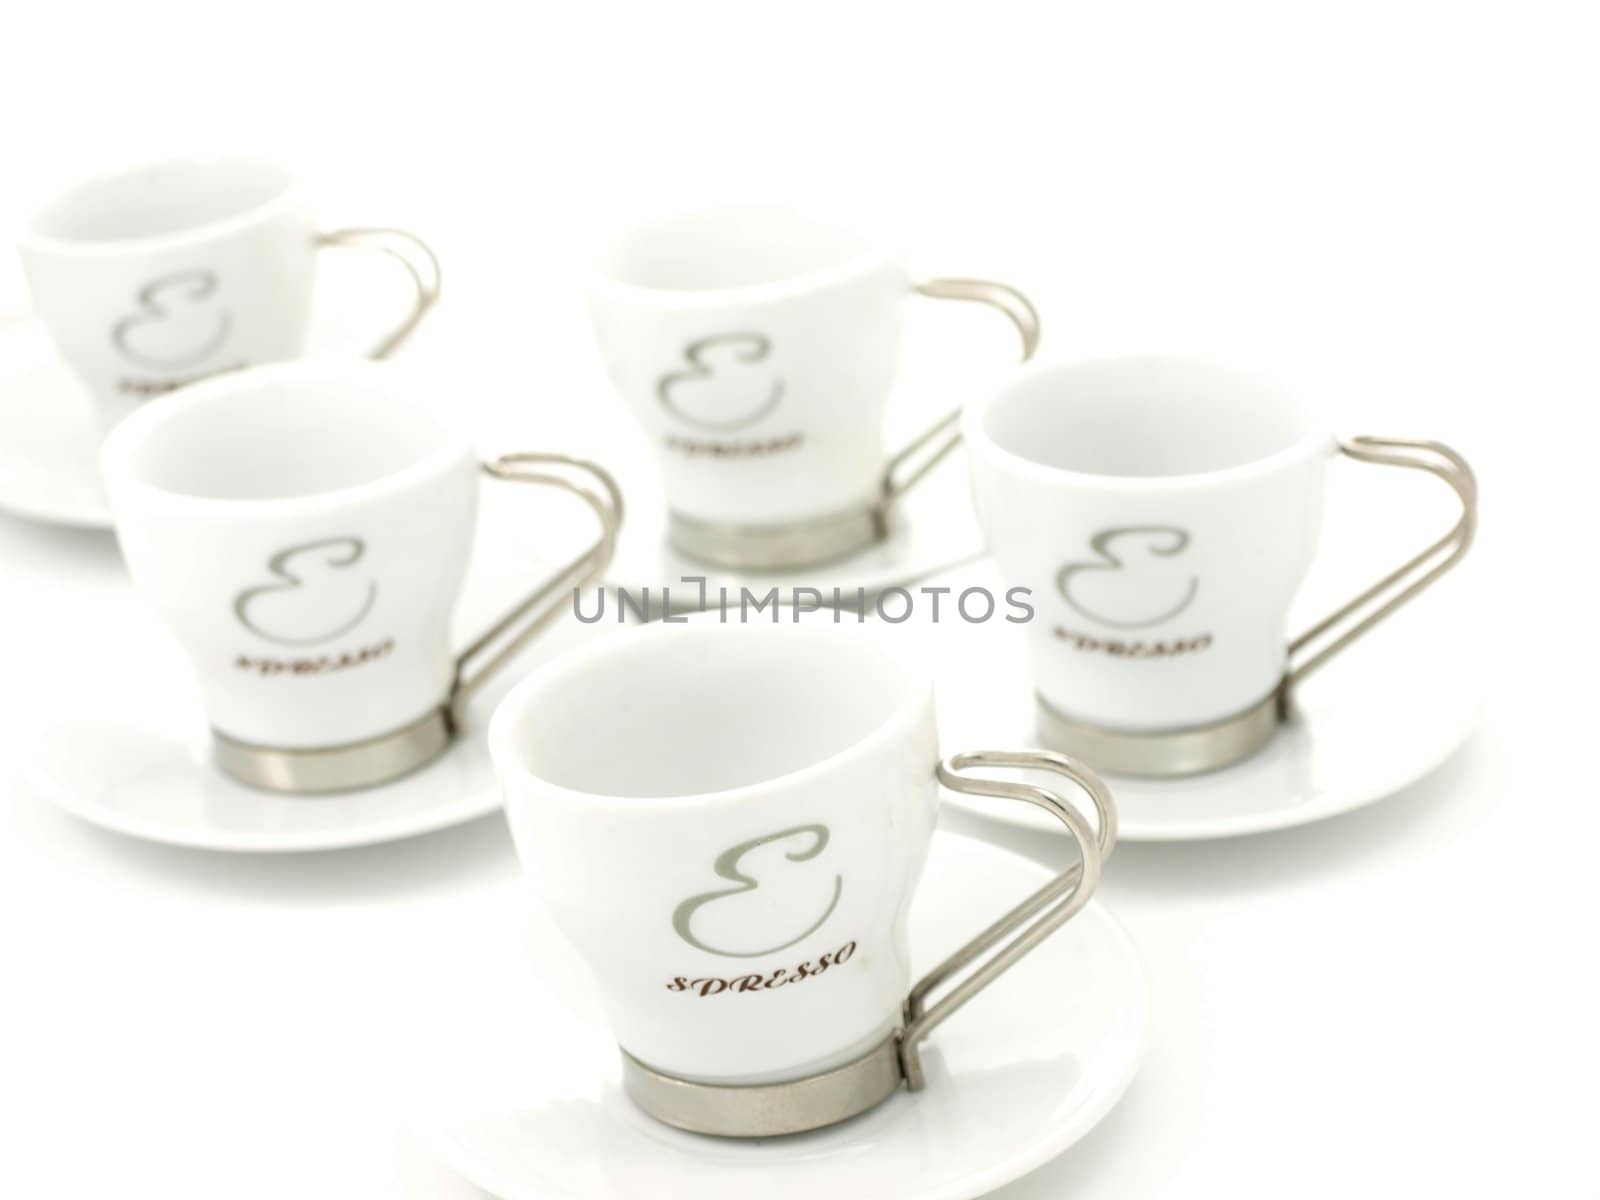 Espresso coffee cups by Arvebettum